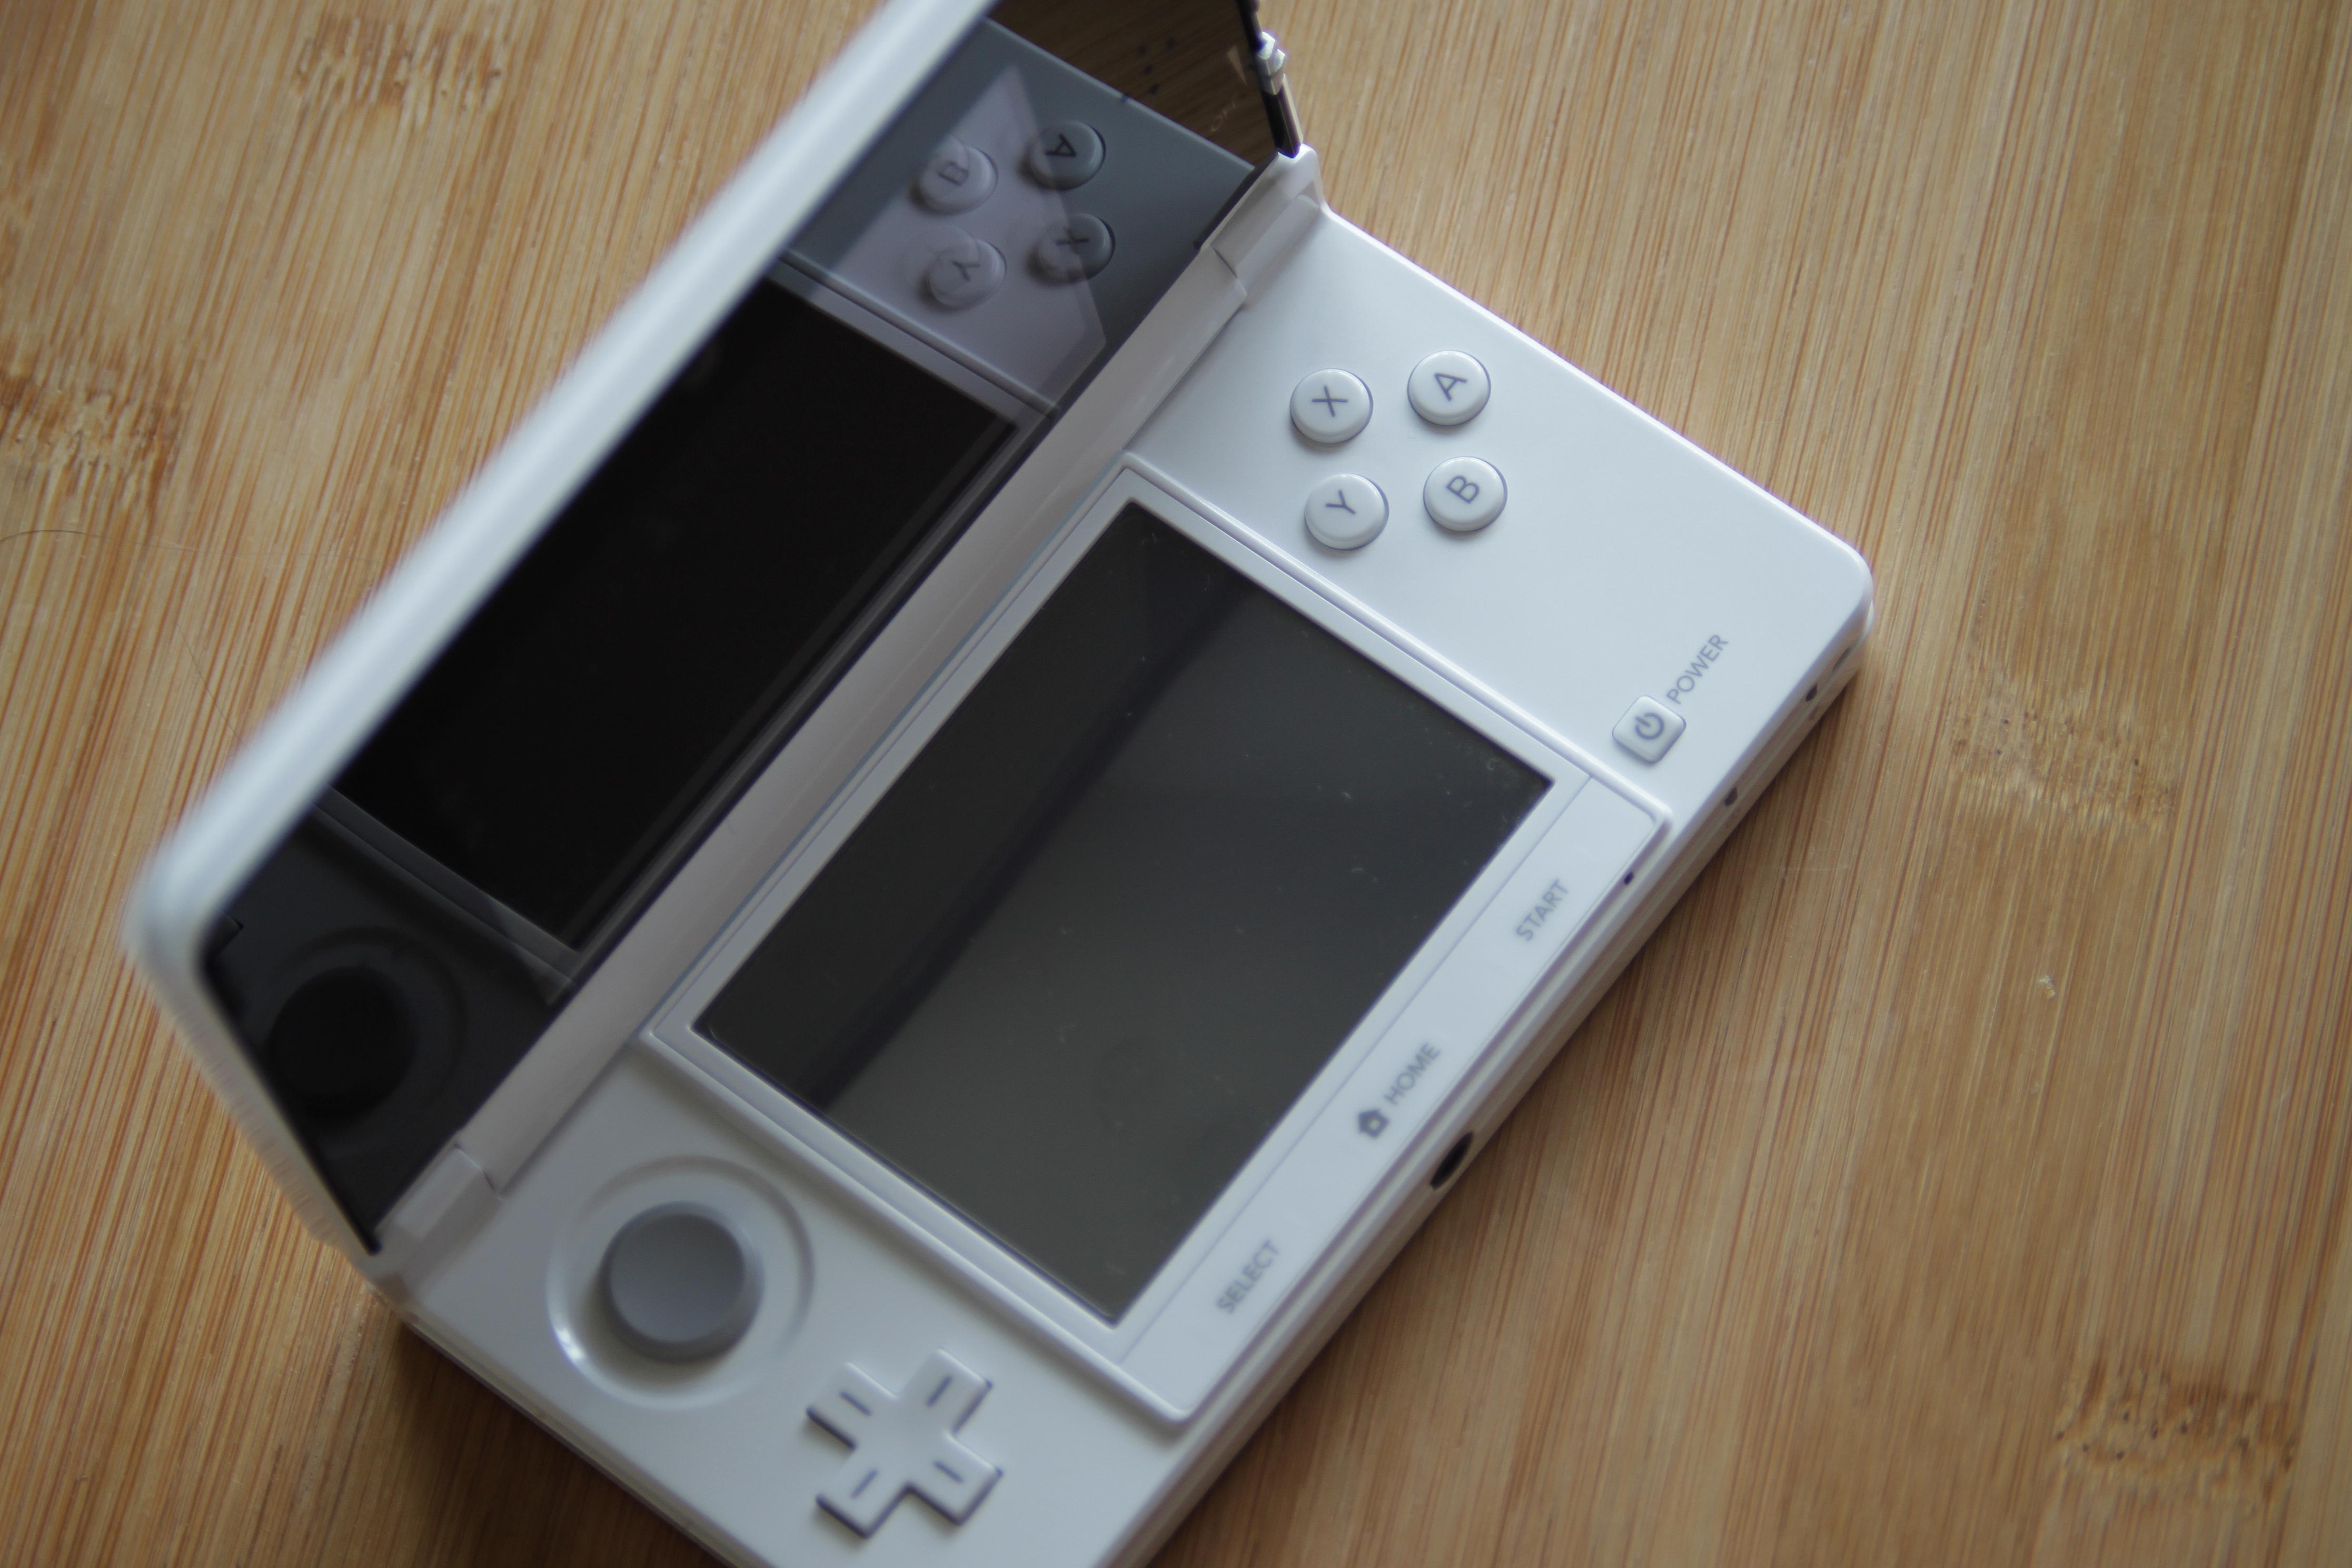 Nintendo DSi XL goes on sale March 5